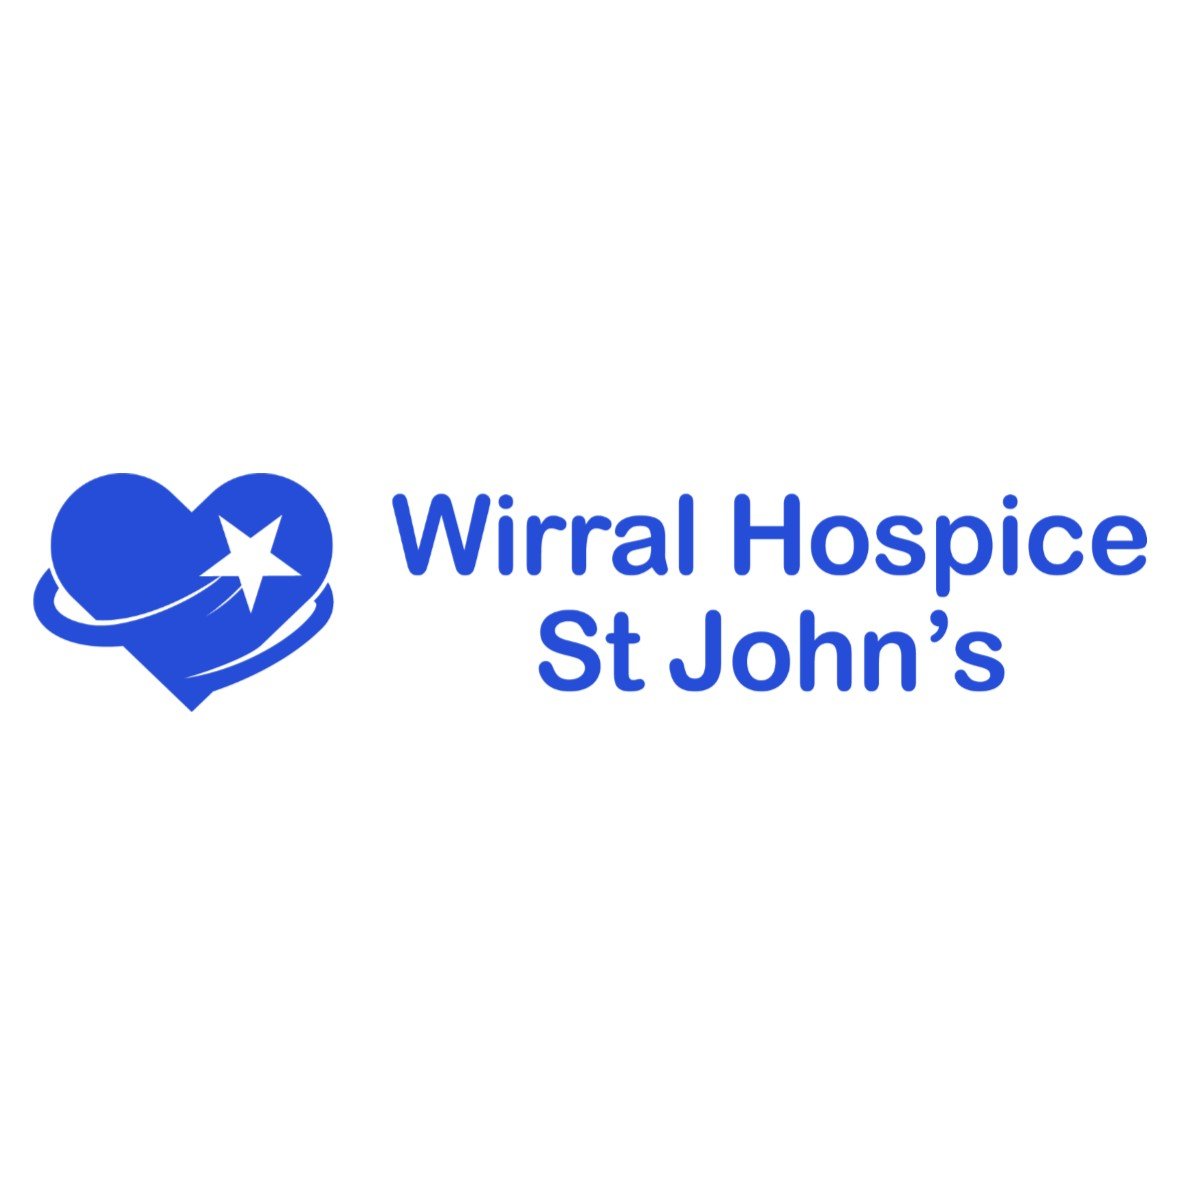 Wirral Hospice St John's logo